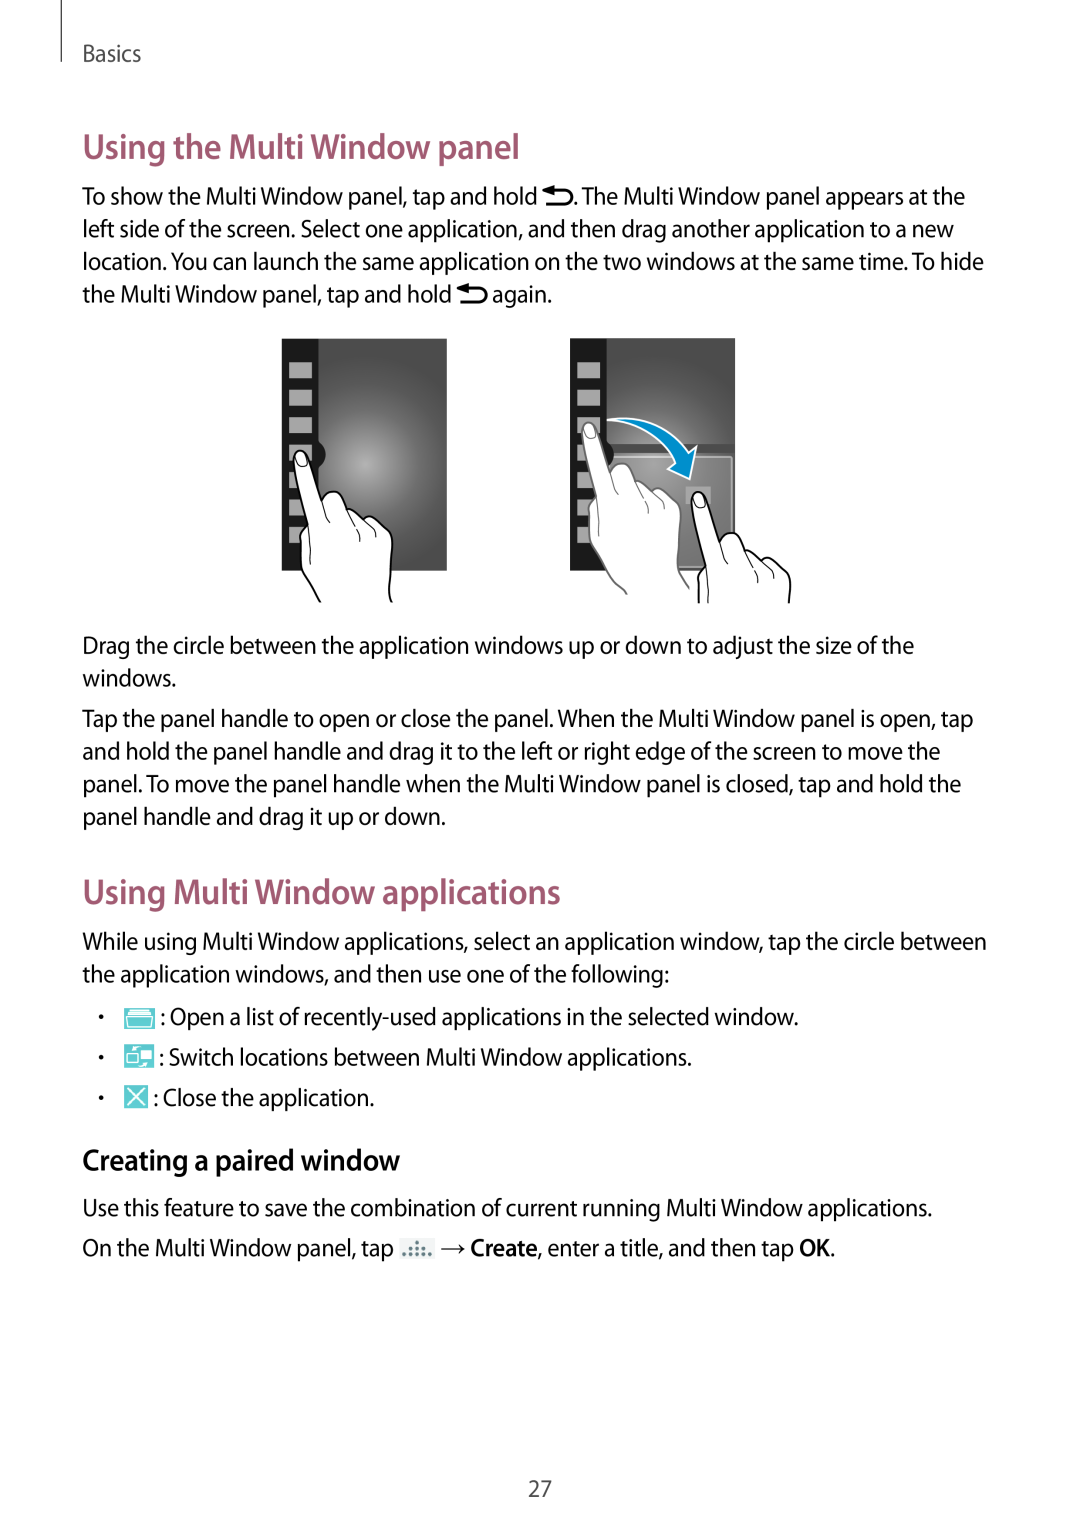 Samsung SM-G7102ZWAWTL Using the Multi Window panel, Using Multi Window applications, Creating a paired window, Basics 